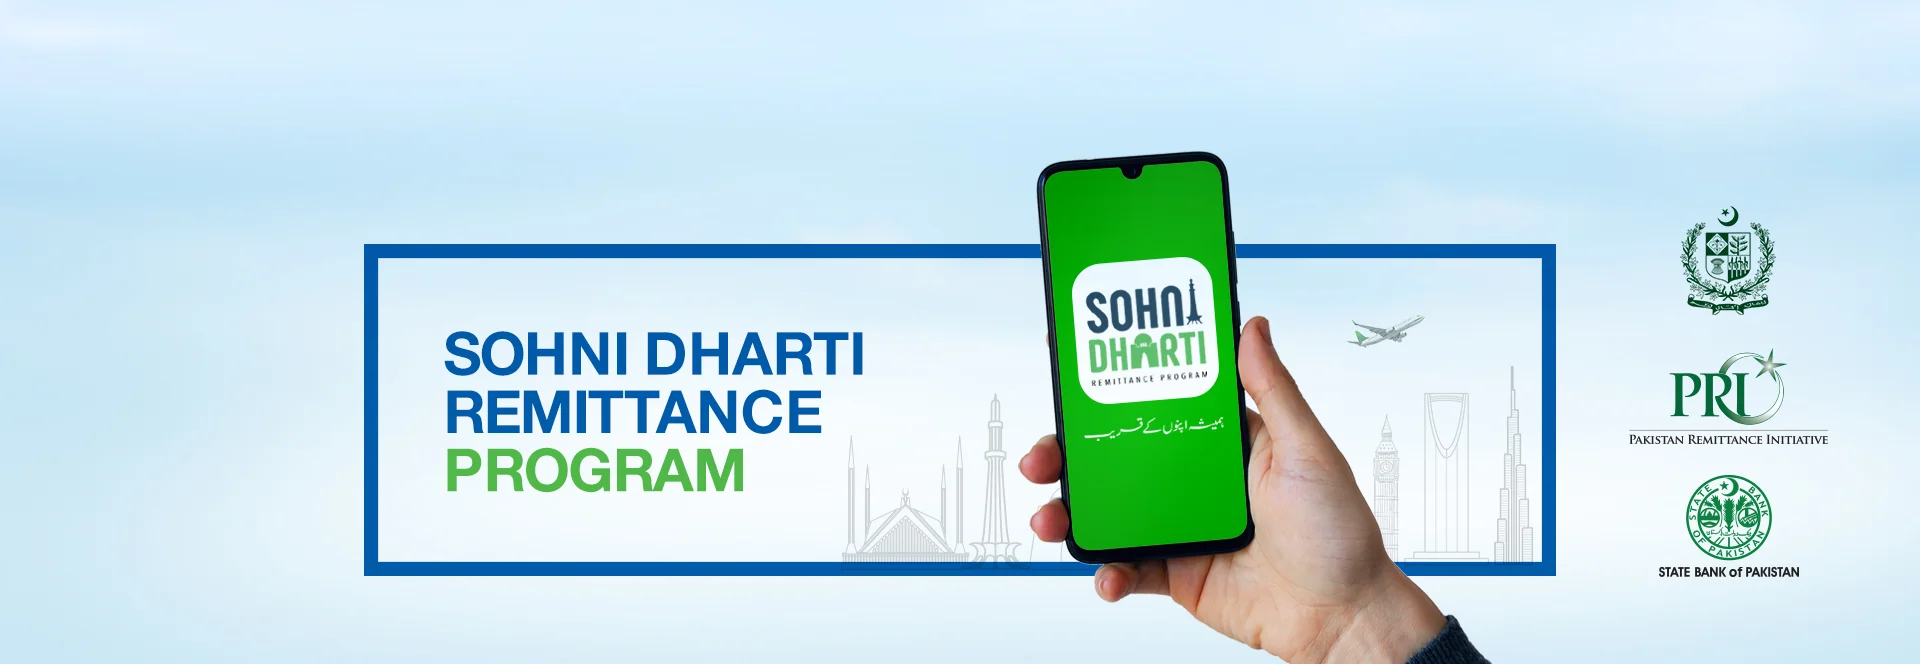 Sohni Dharti Remittance Program